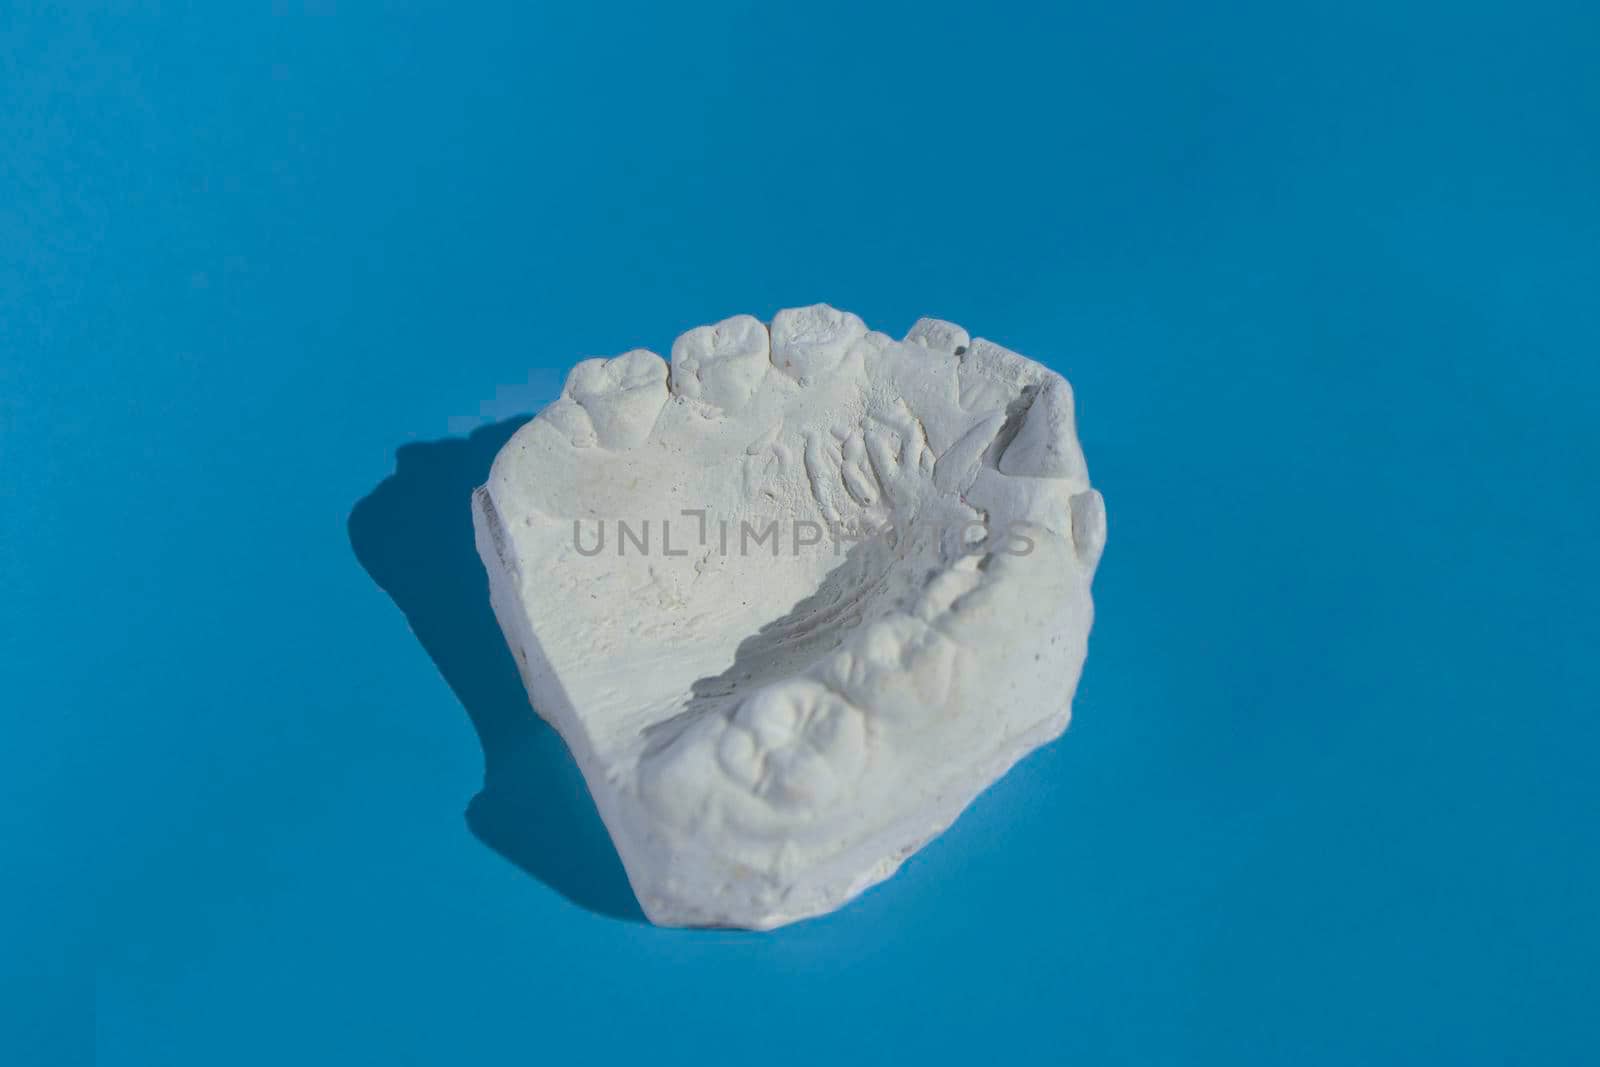 Dental casting gypsum model plaster cast stomatologic human jaws prothetic laboratory. High quality photo